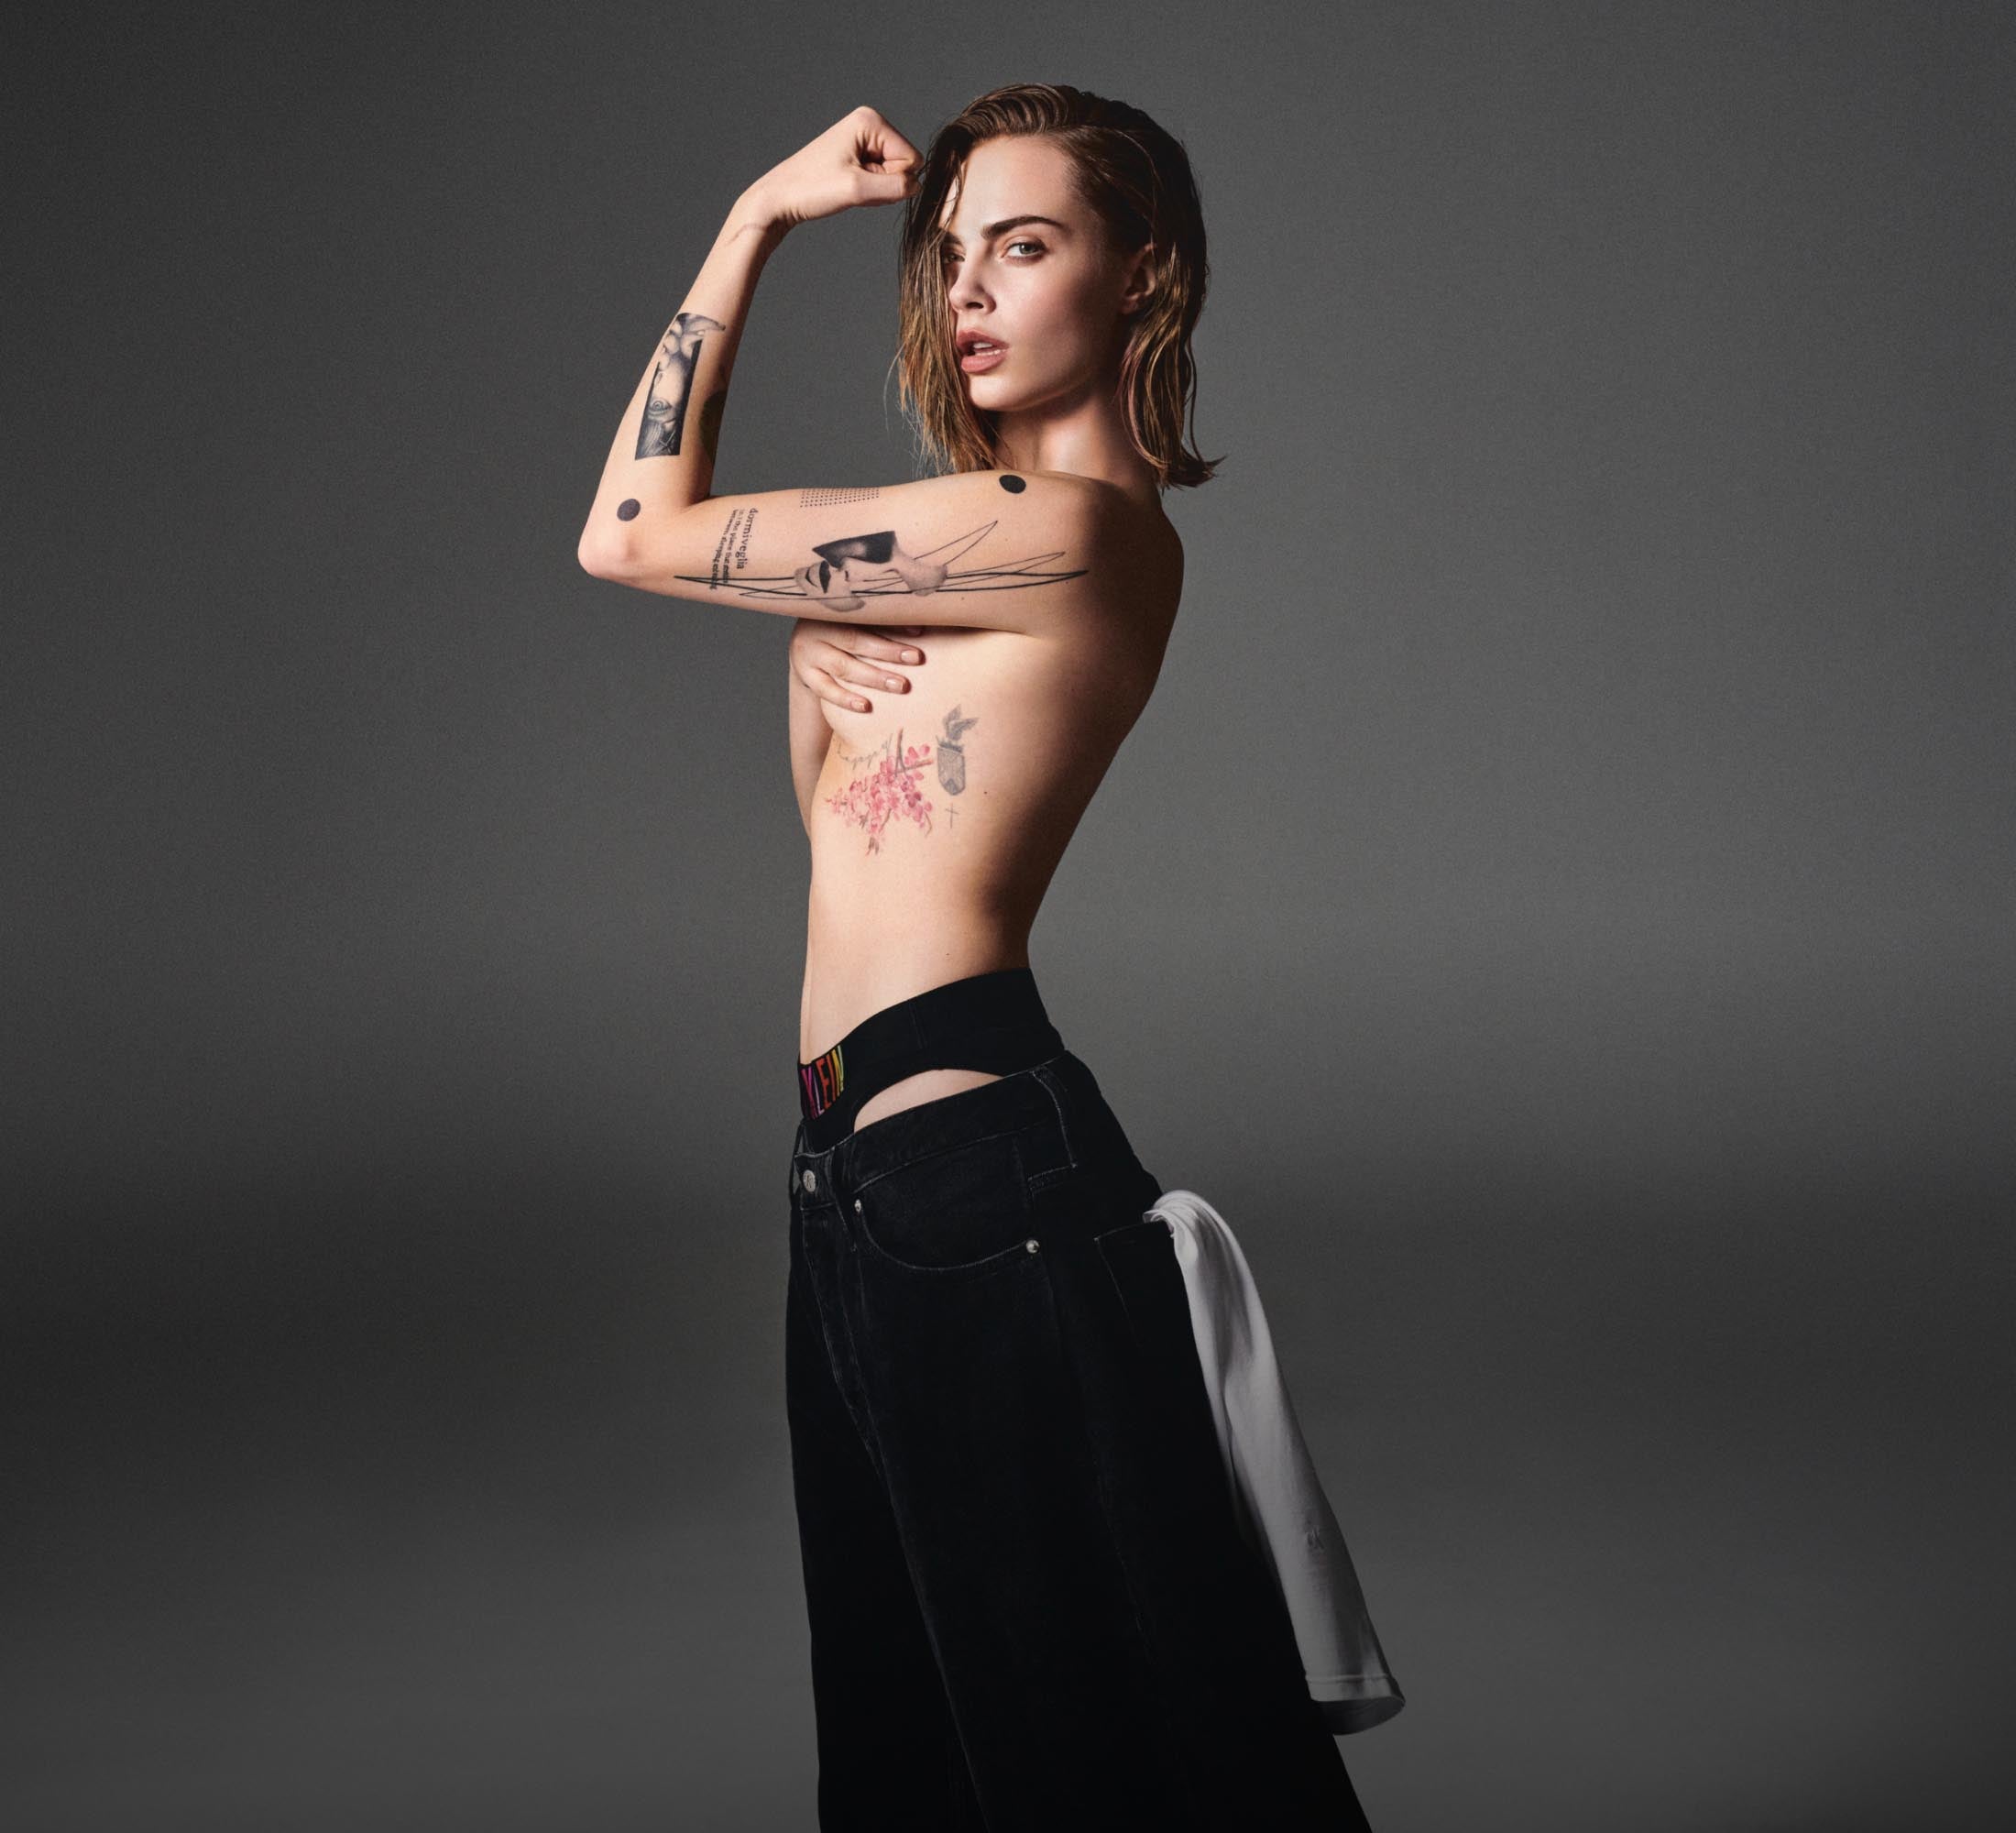 Cara Delevingne posing topless wearing Calvin Klein Pride underwear